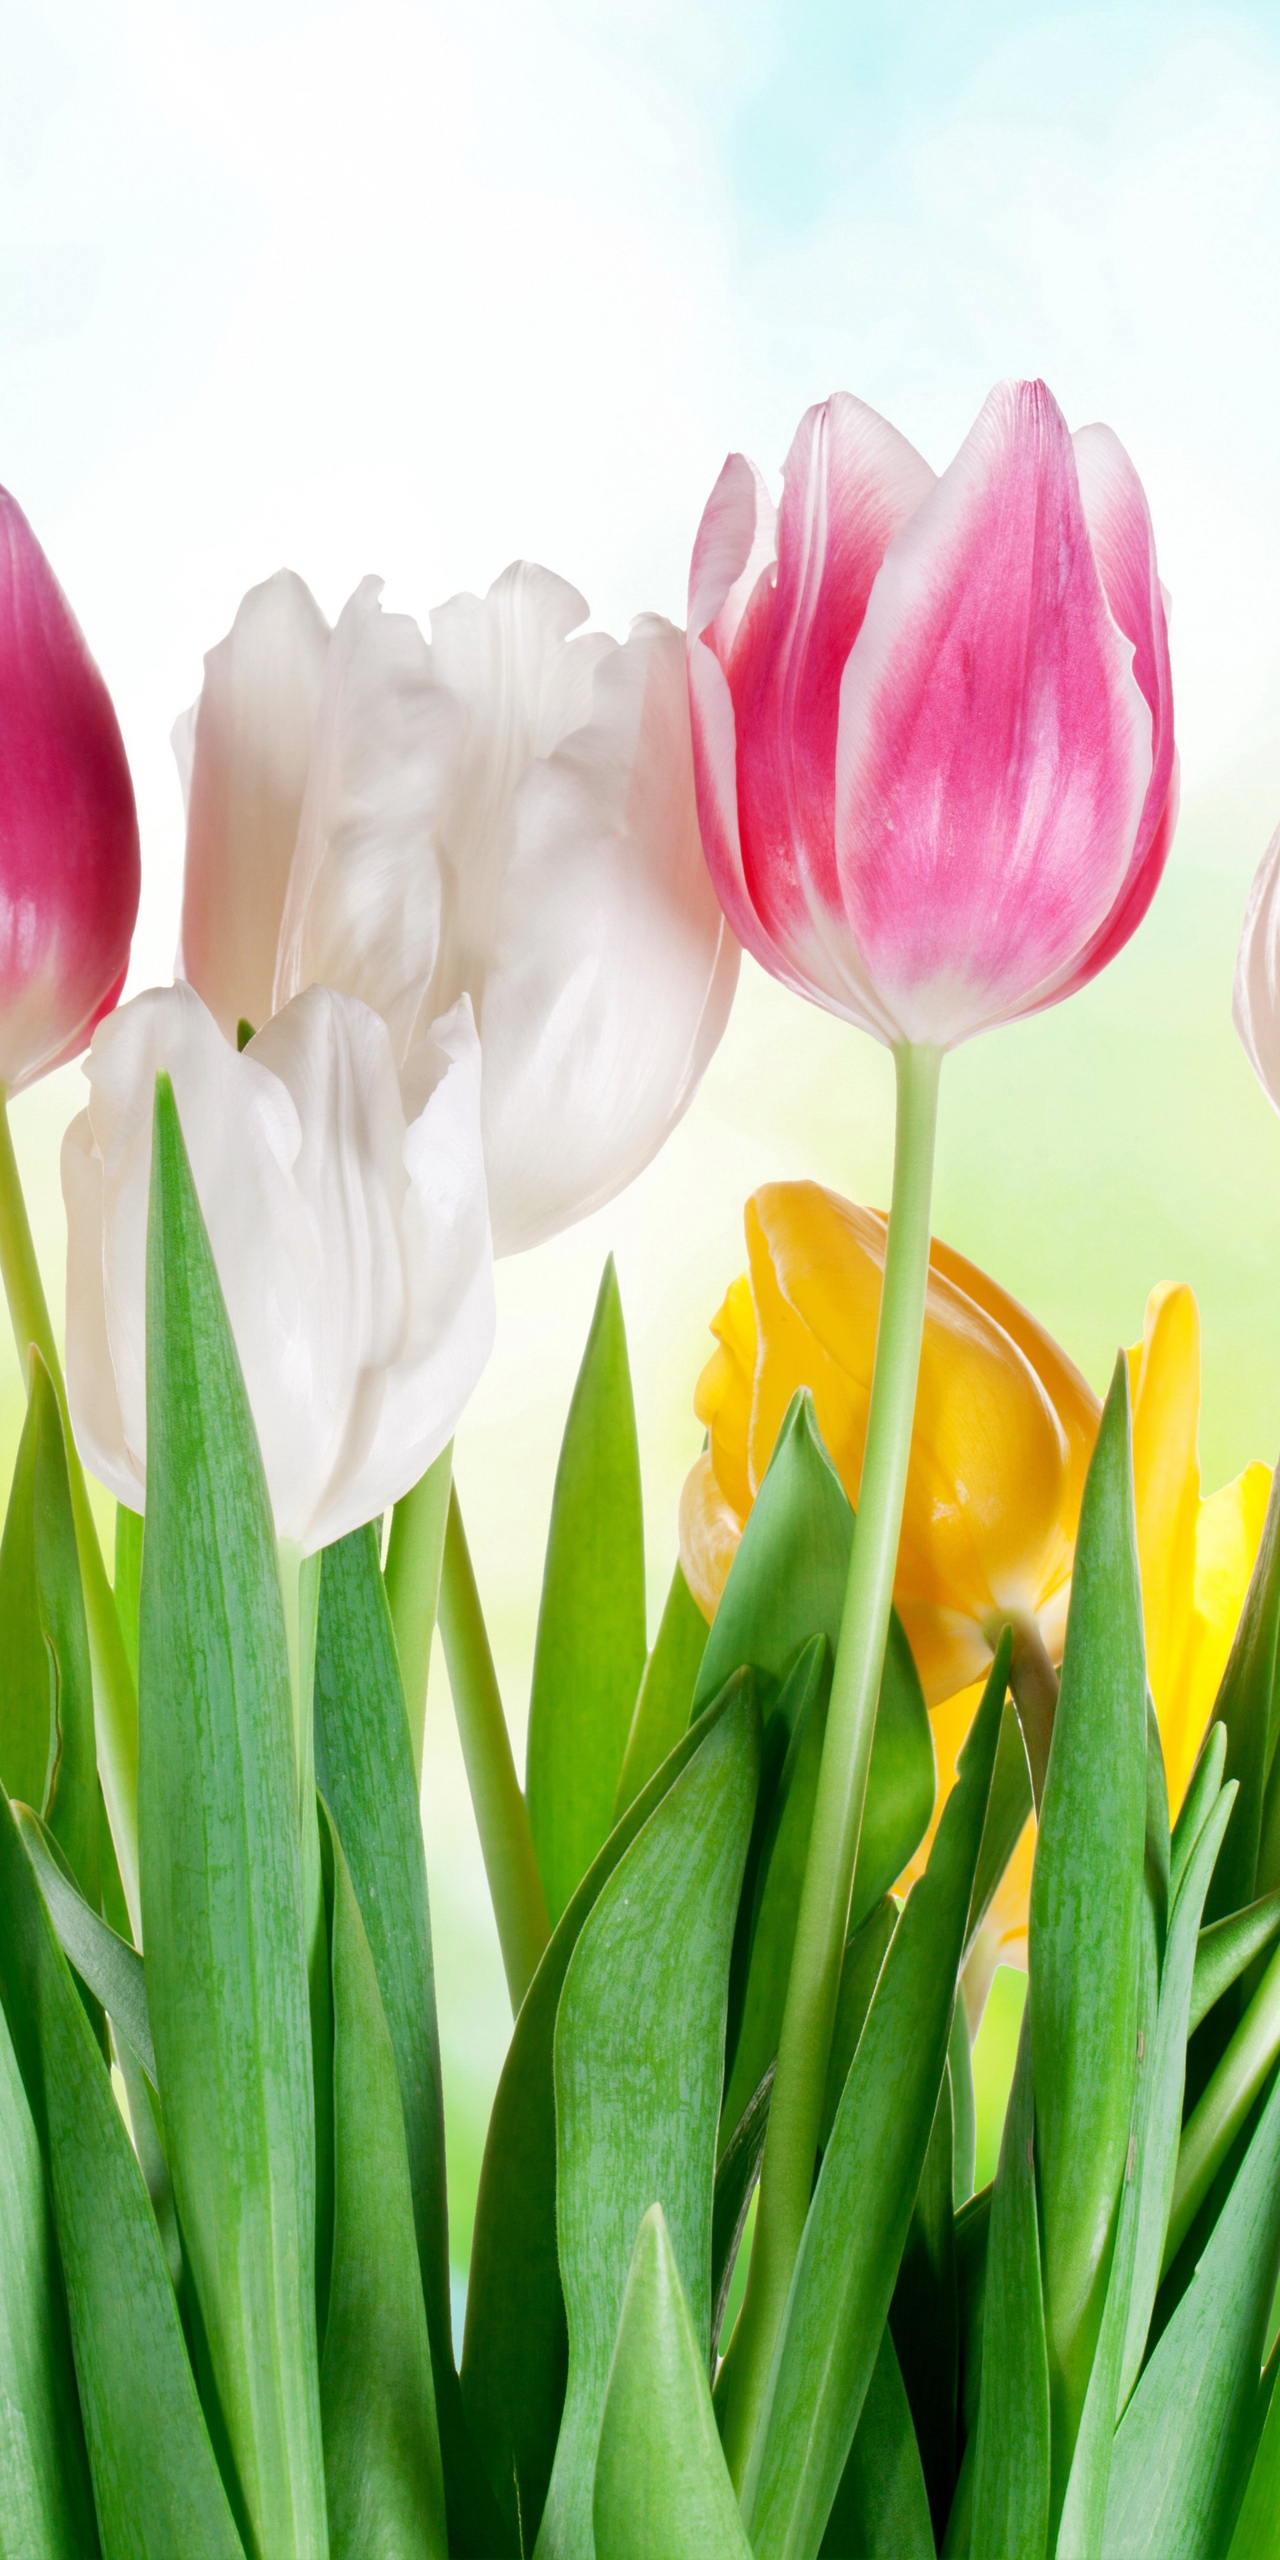 Image: Bouquet, tulips, flowers